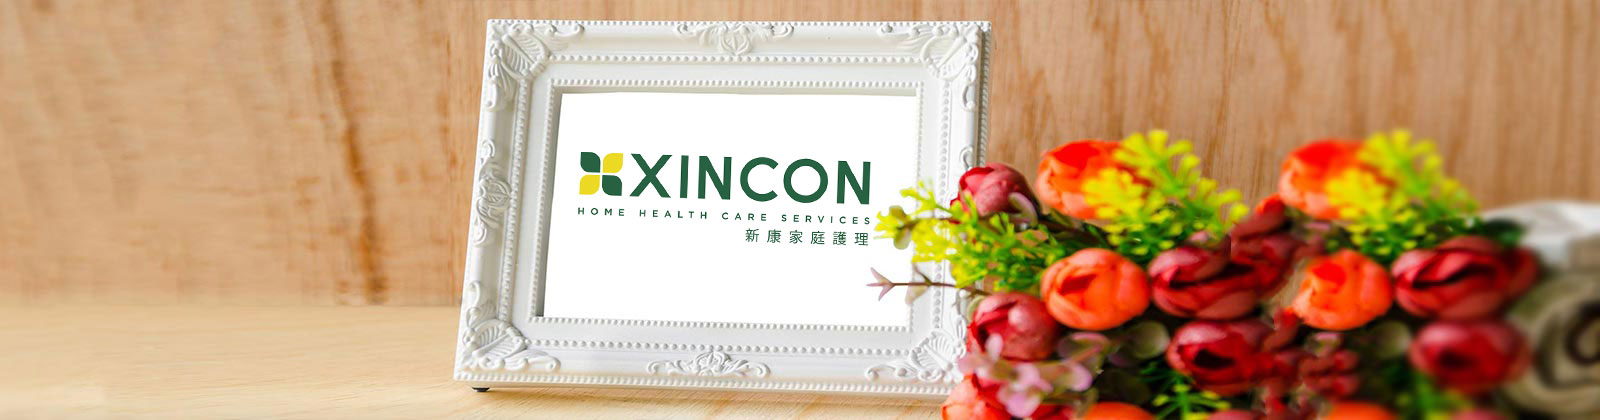 Xincon Patient Caregiver Gallery